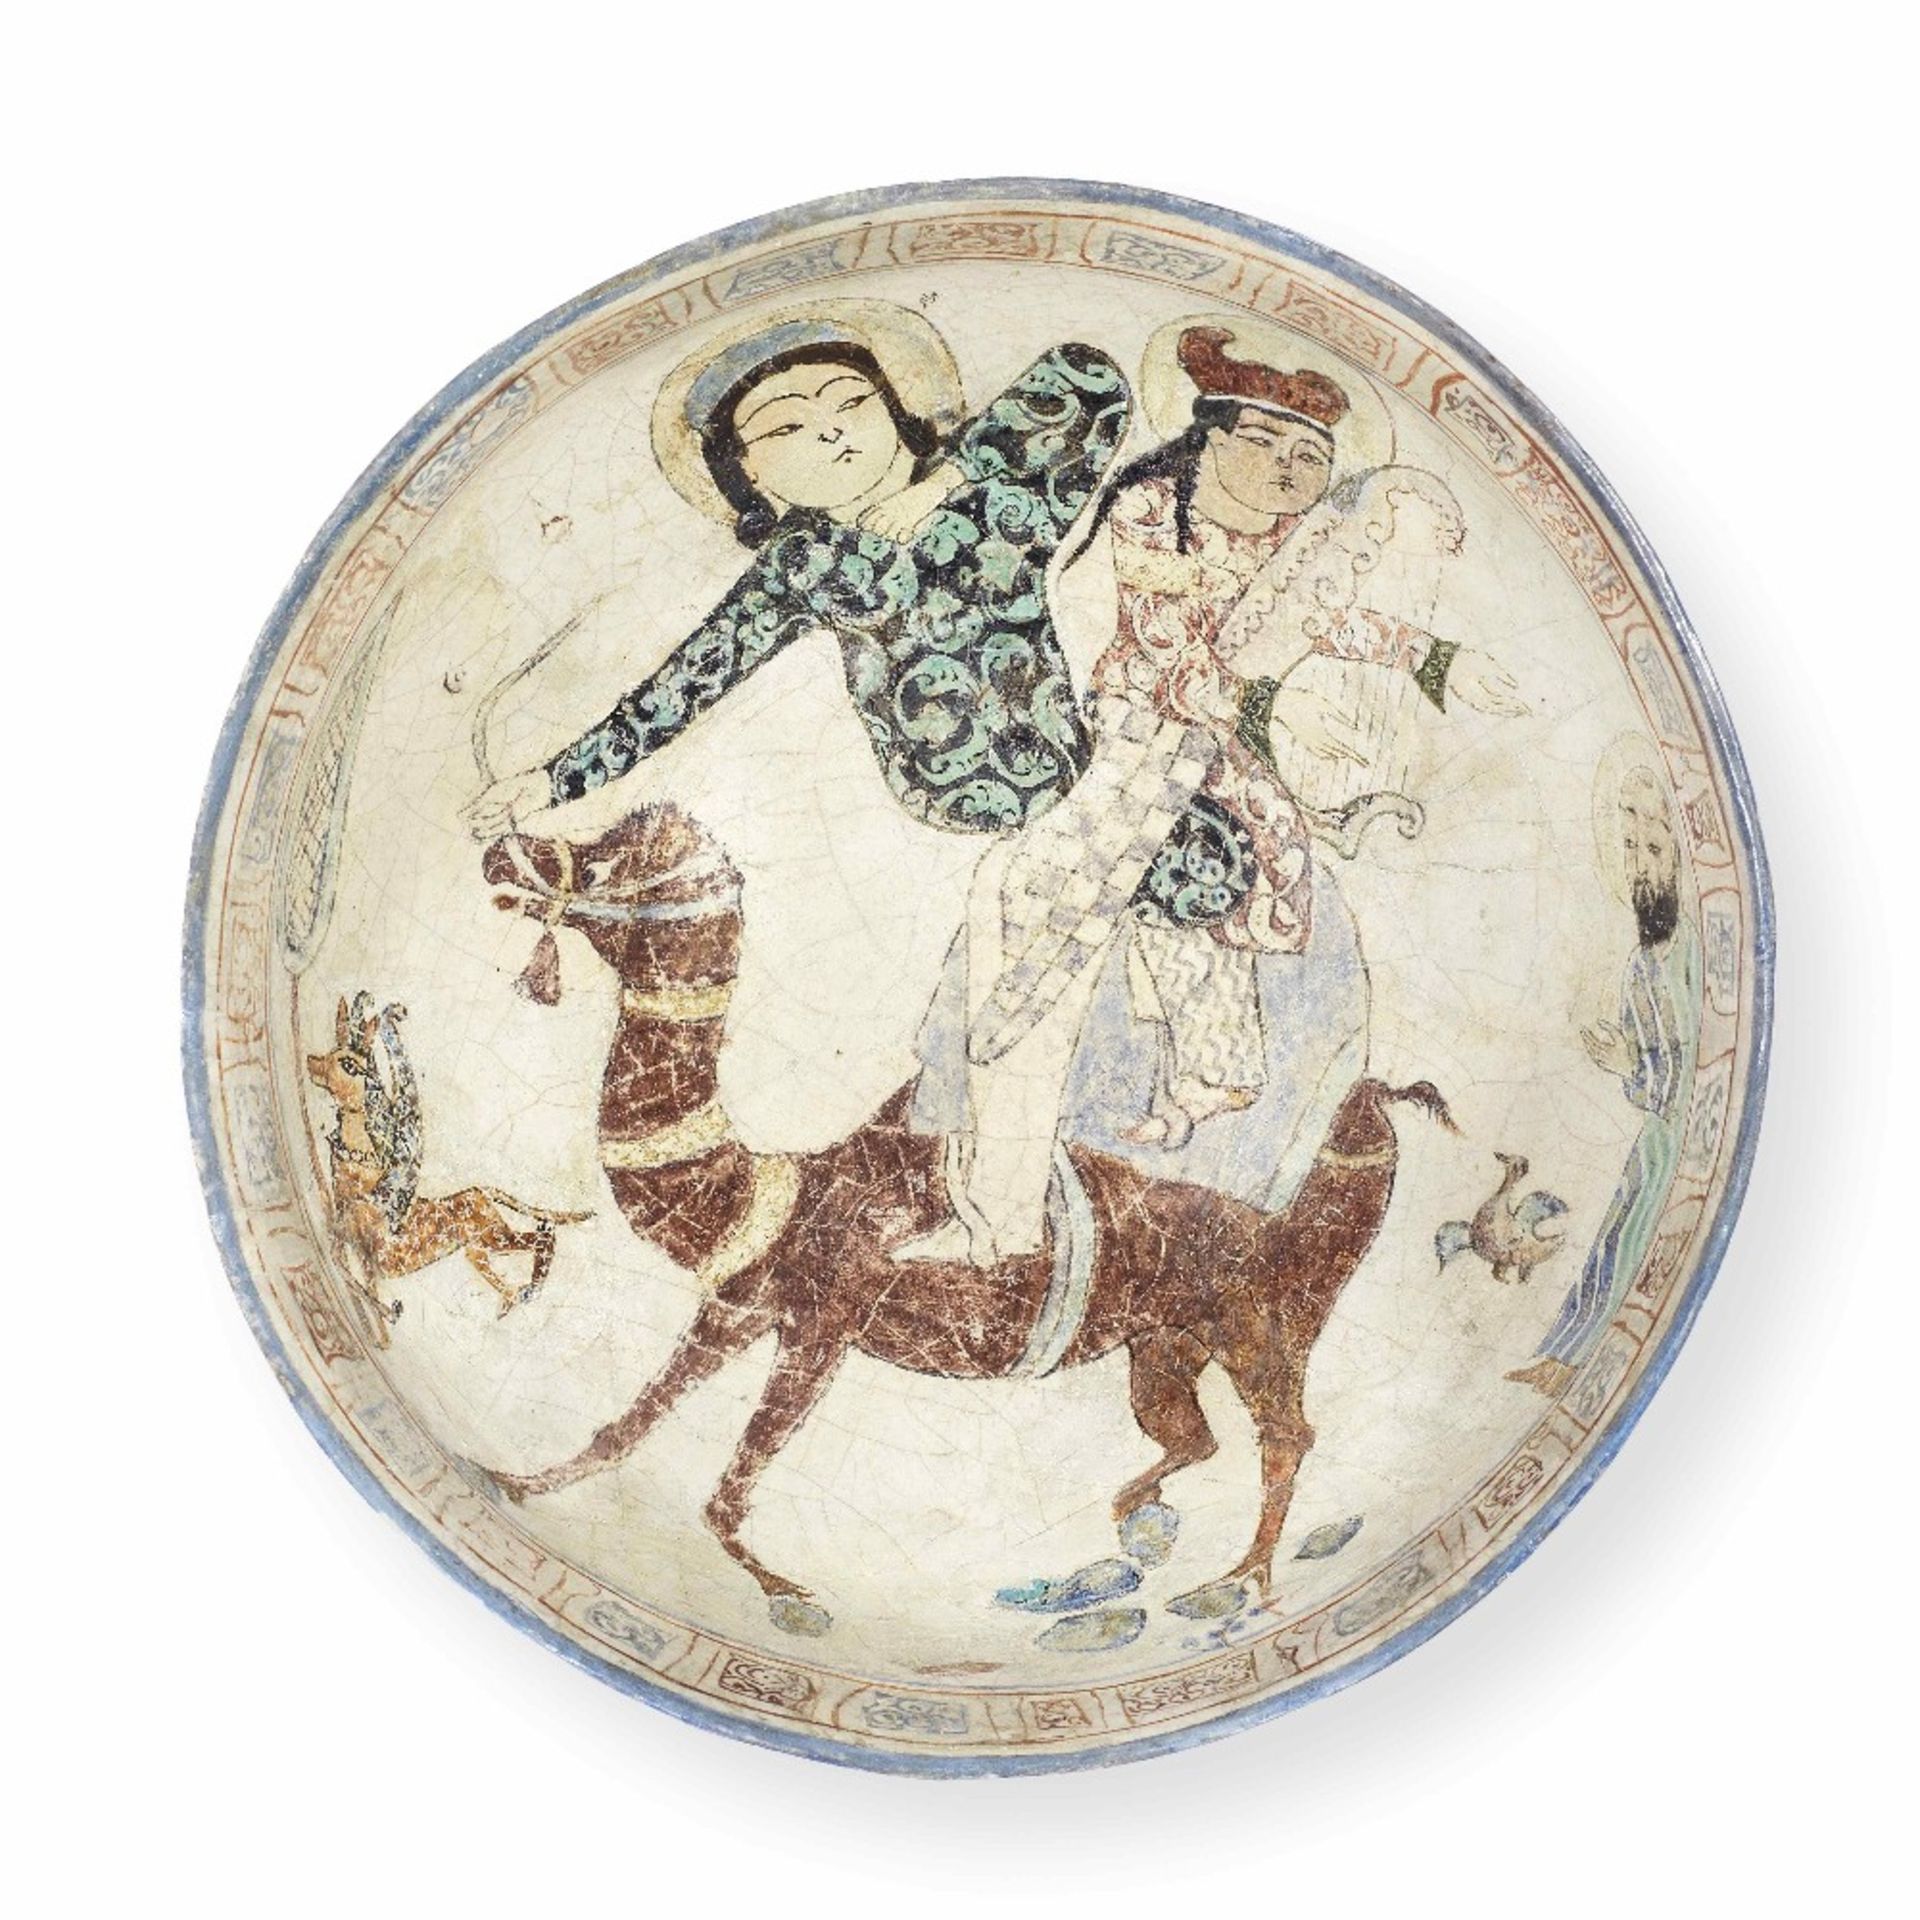 A rare Minai pottery bowl depicting Bahram Gur and Azada Persia, late 12th/ early 13th Century